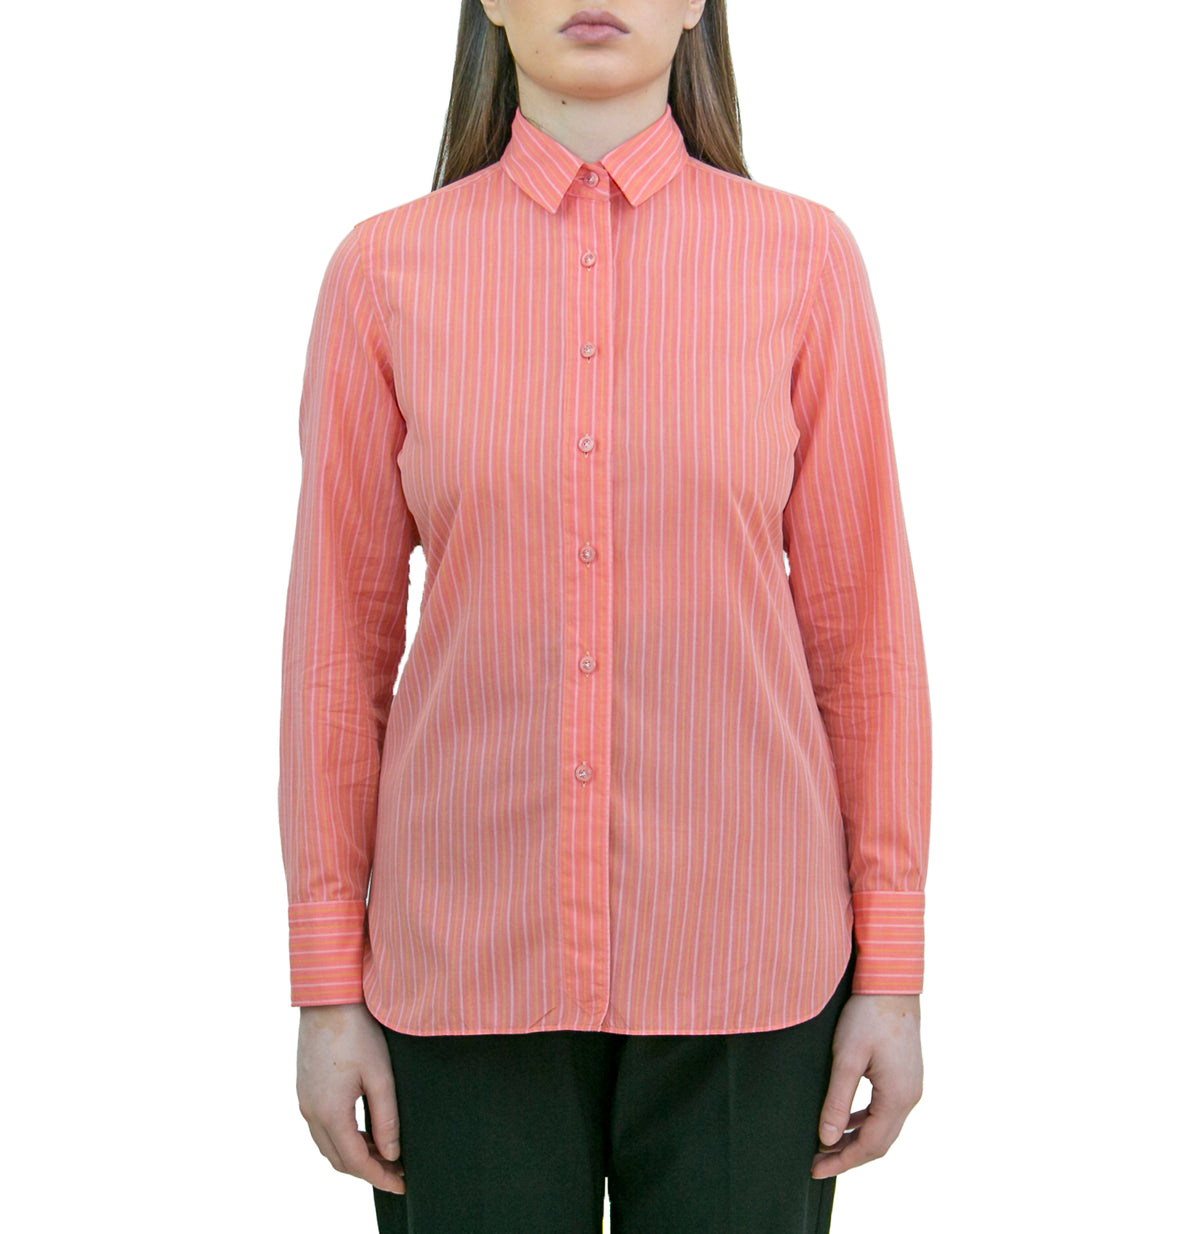 Finamore 1925 women's shirt 170 a due pink striped bottom